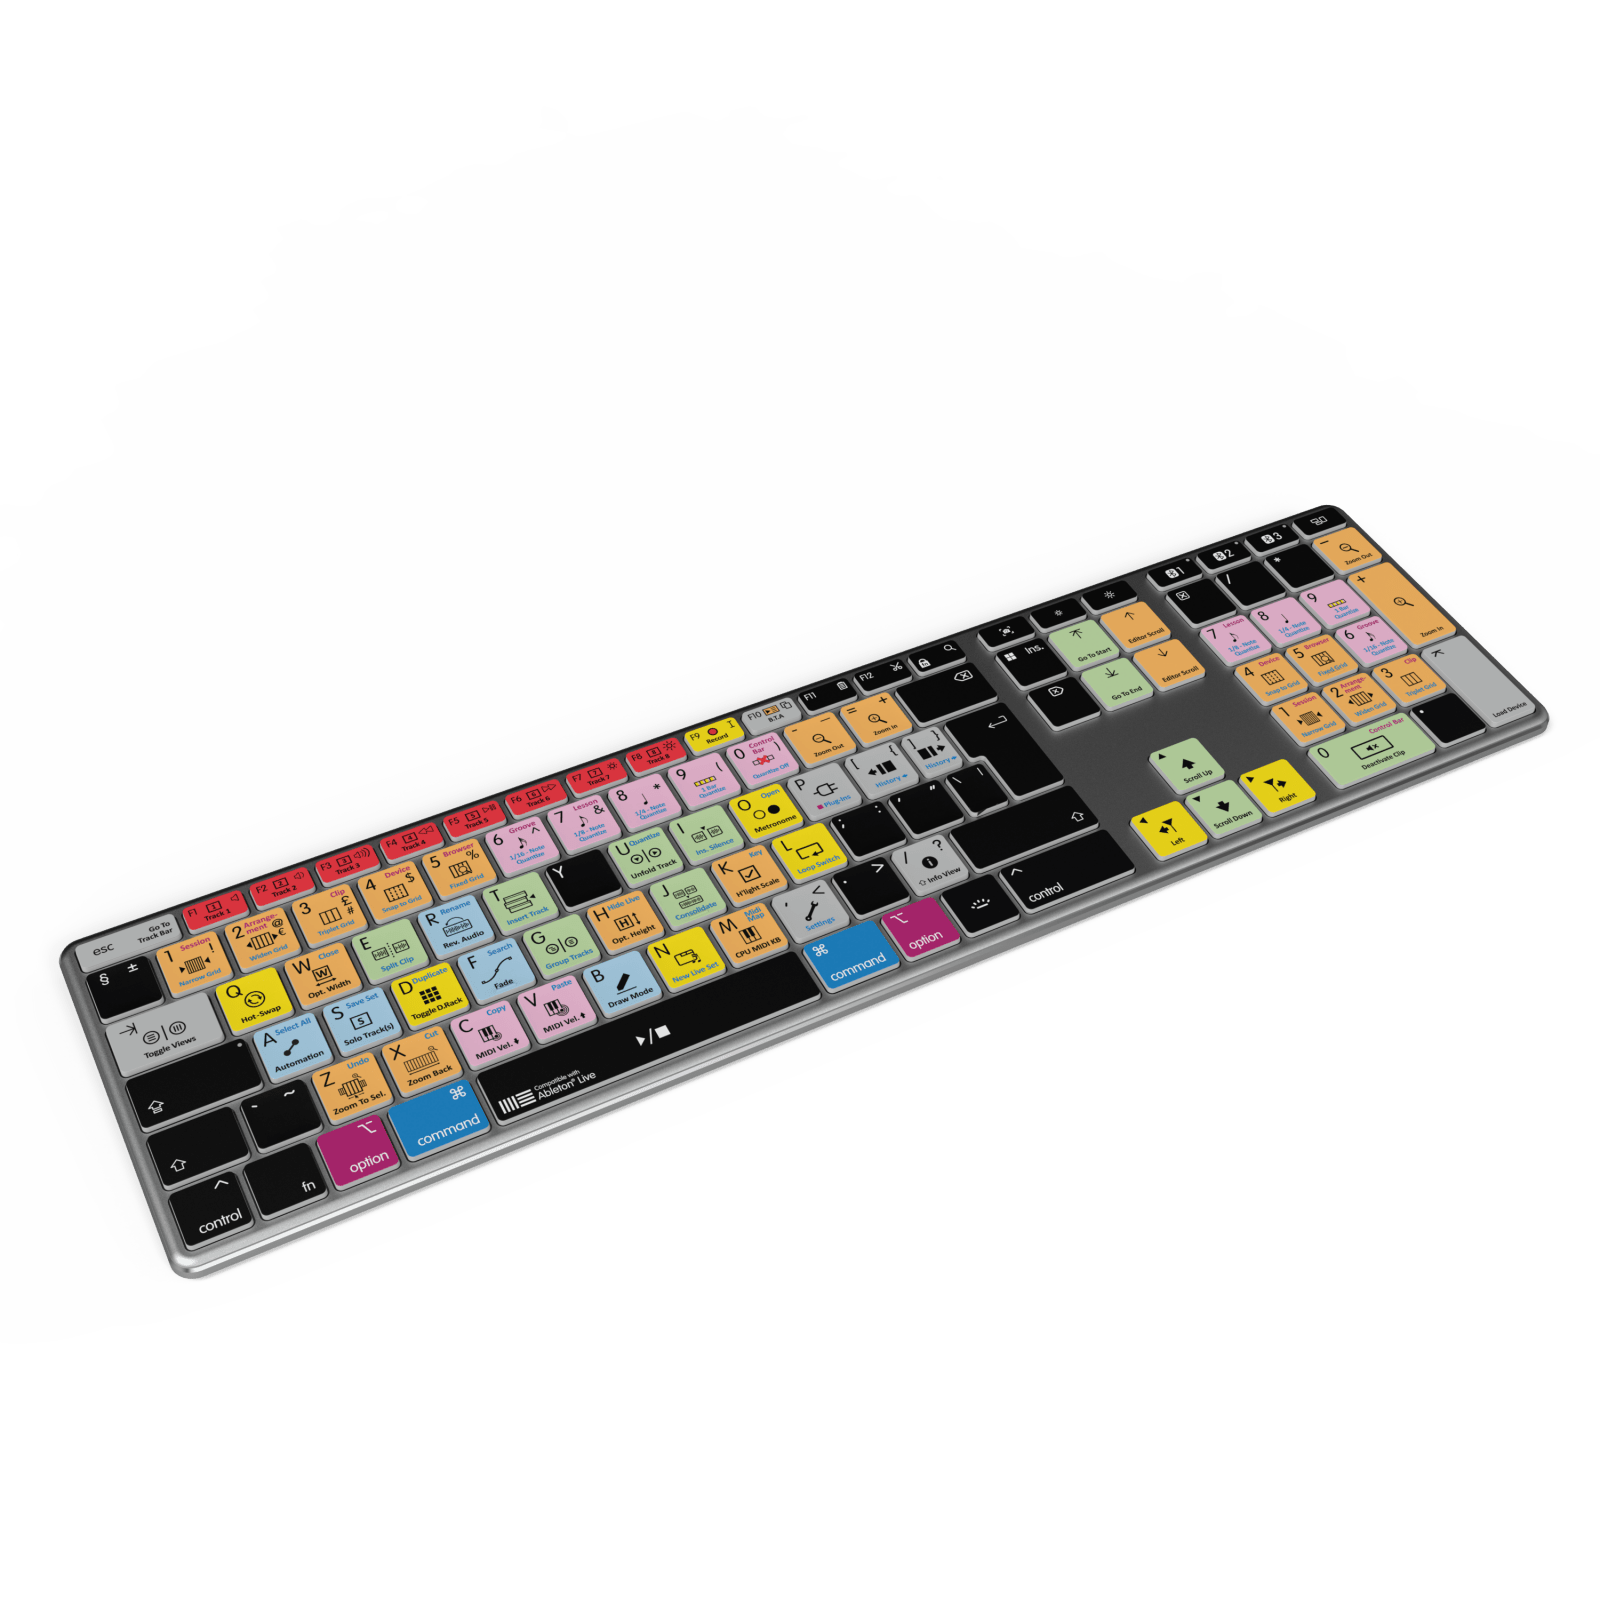 NEW Ableton Live Keyboard | Backlit & Wireless | Mac and PC - Editors Keys FULL KEYBOARD